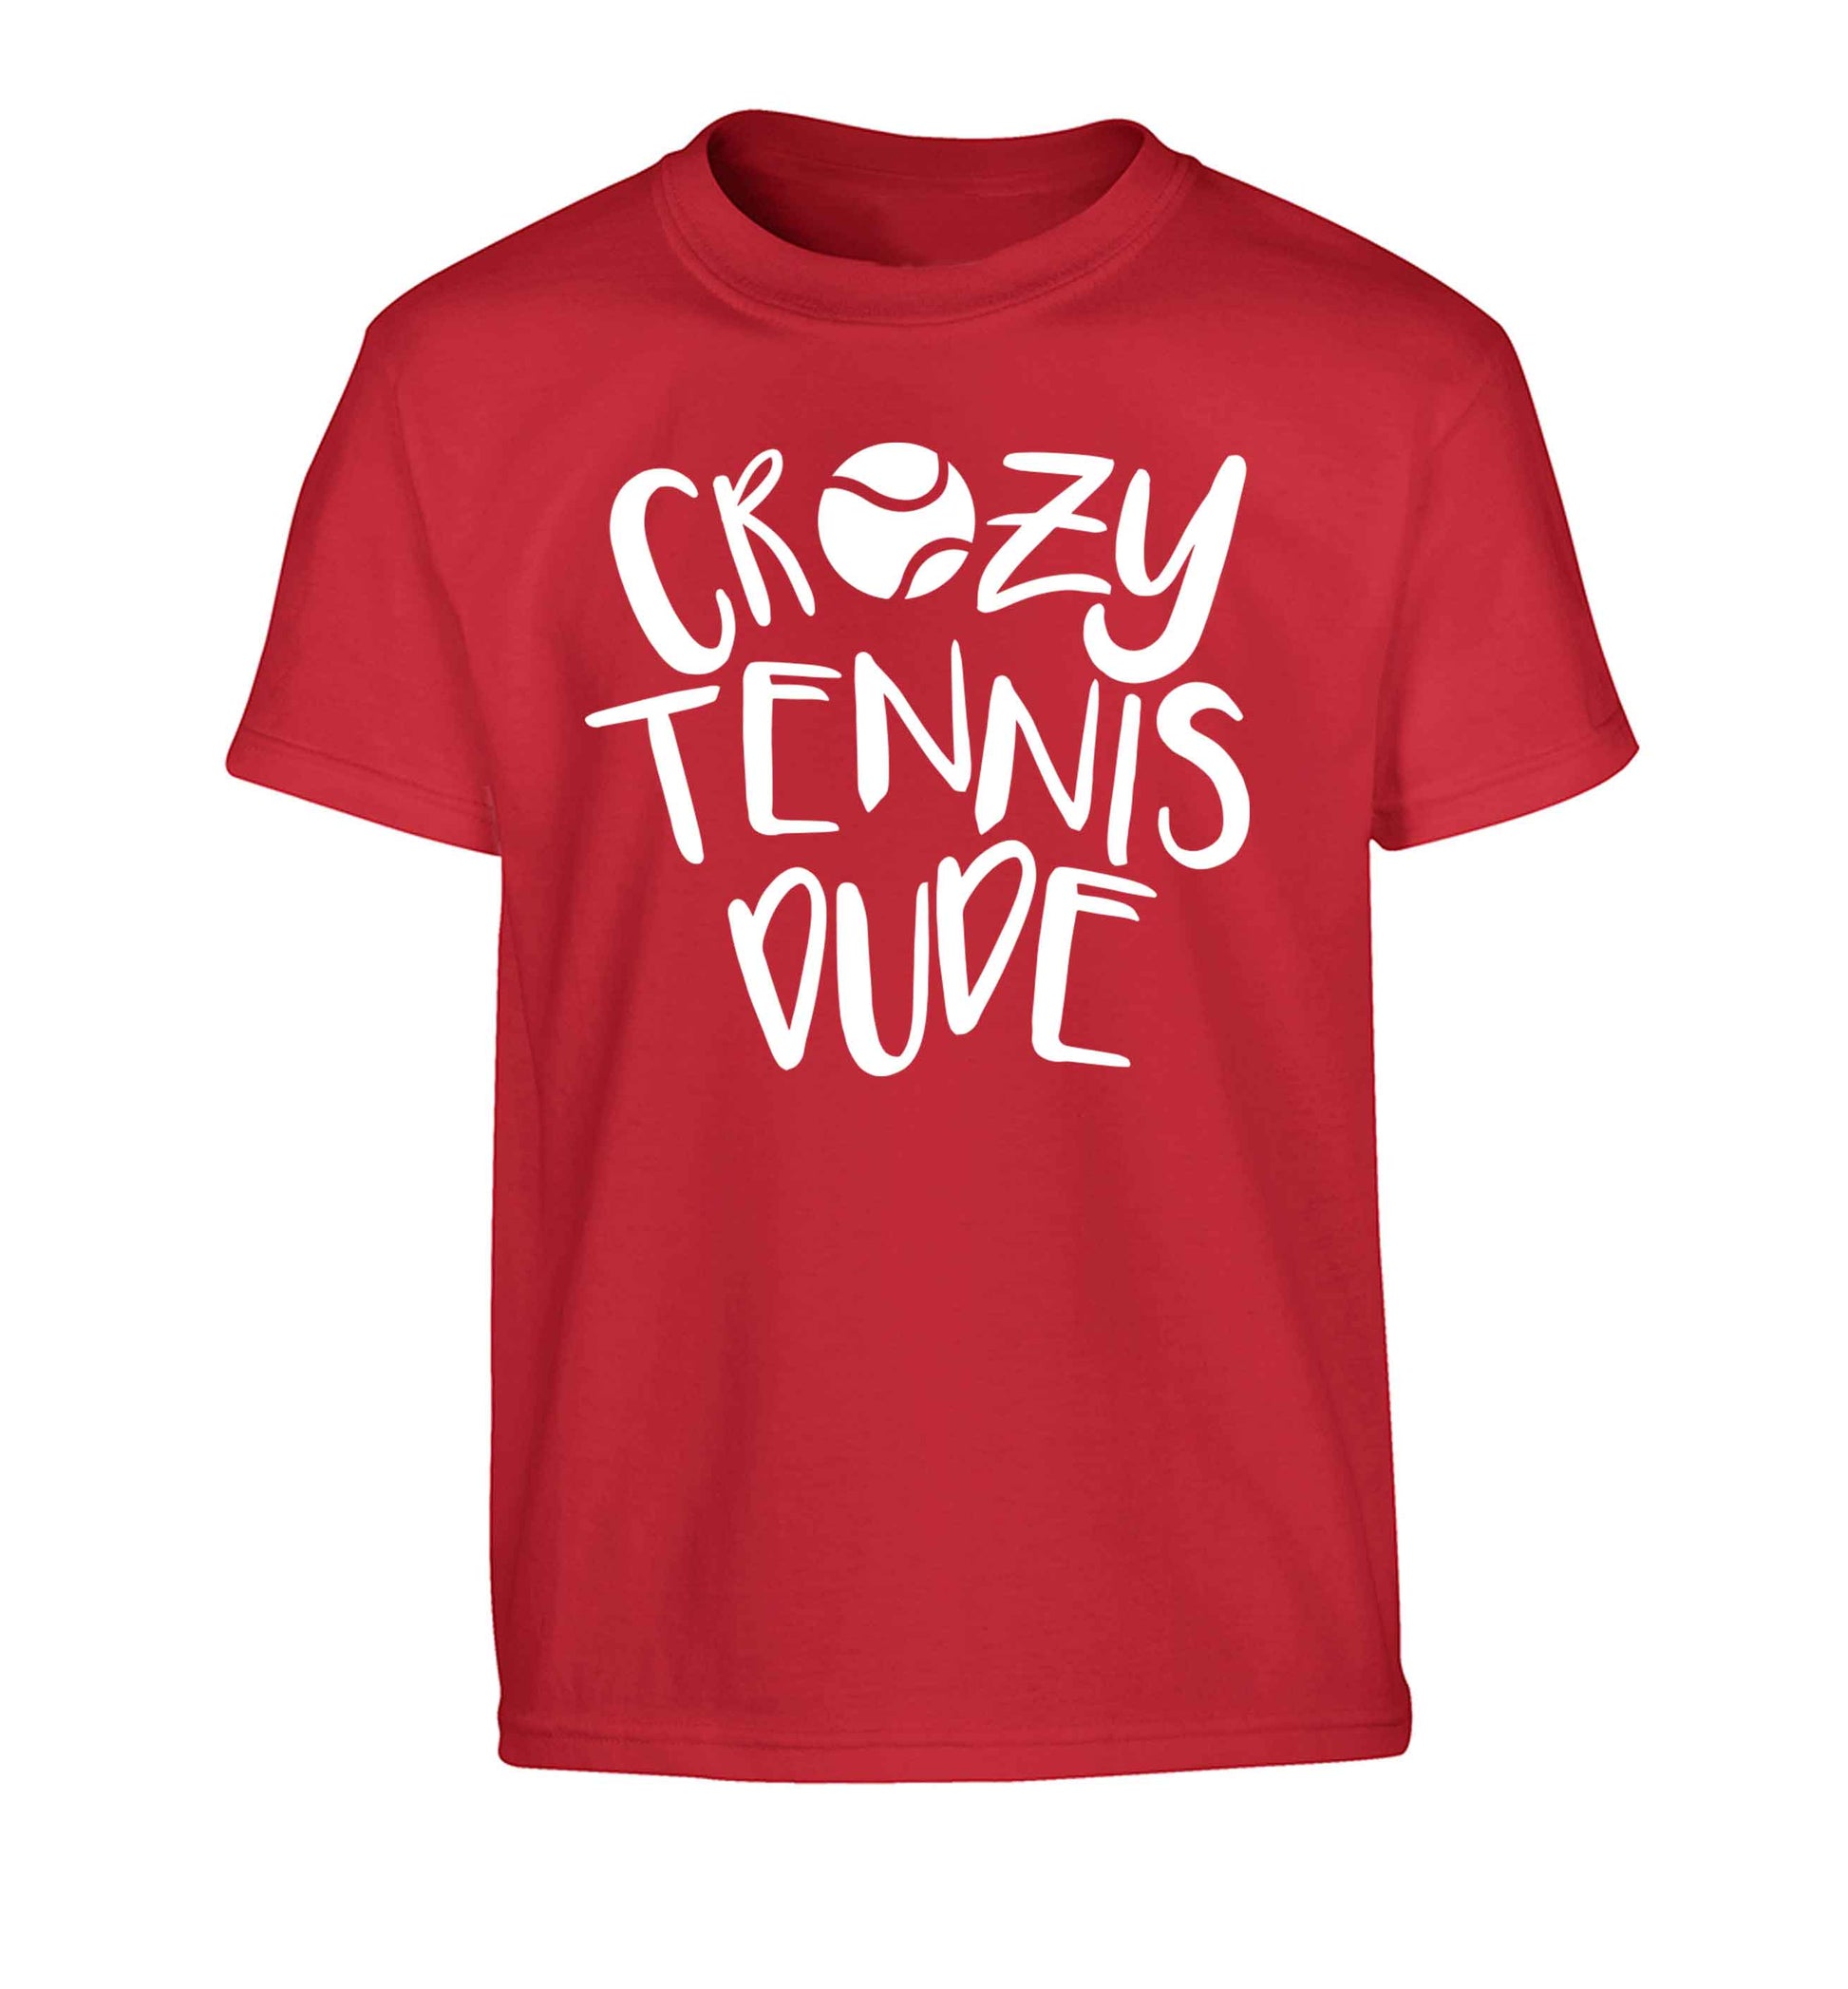 Crazy tennis dude Children's red Tshirt 12-13 Years